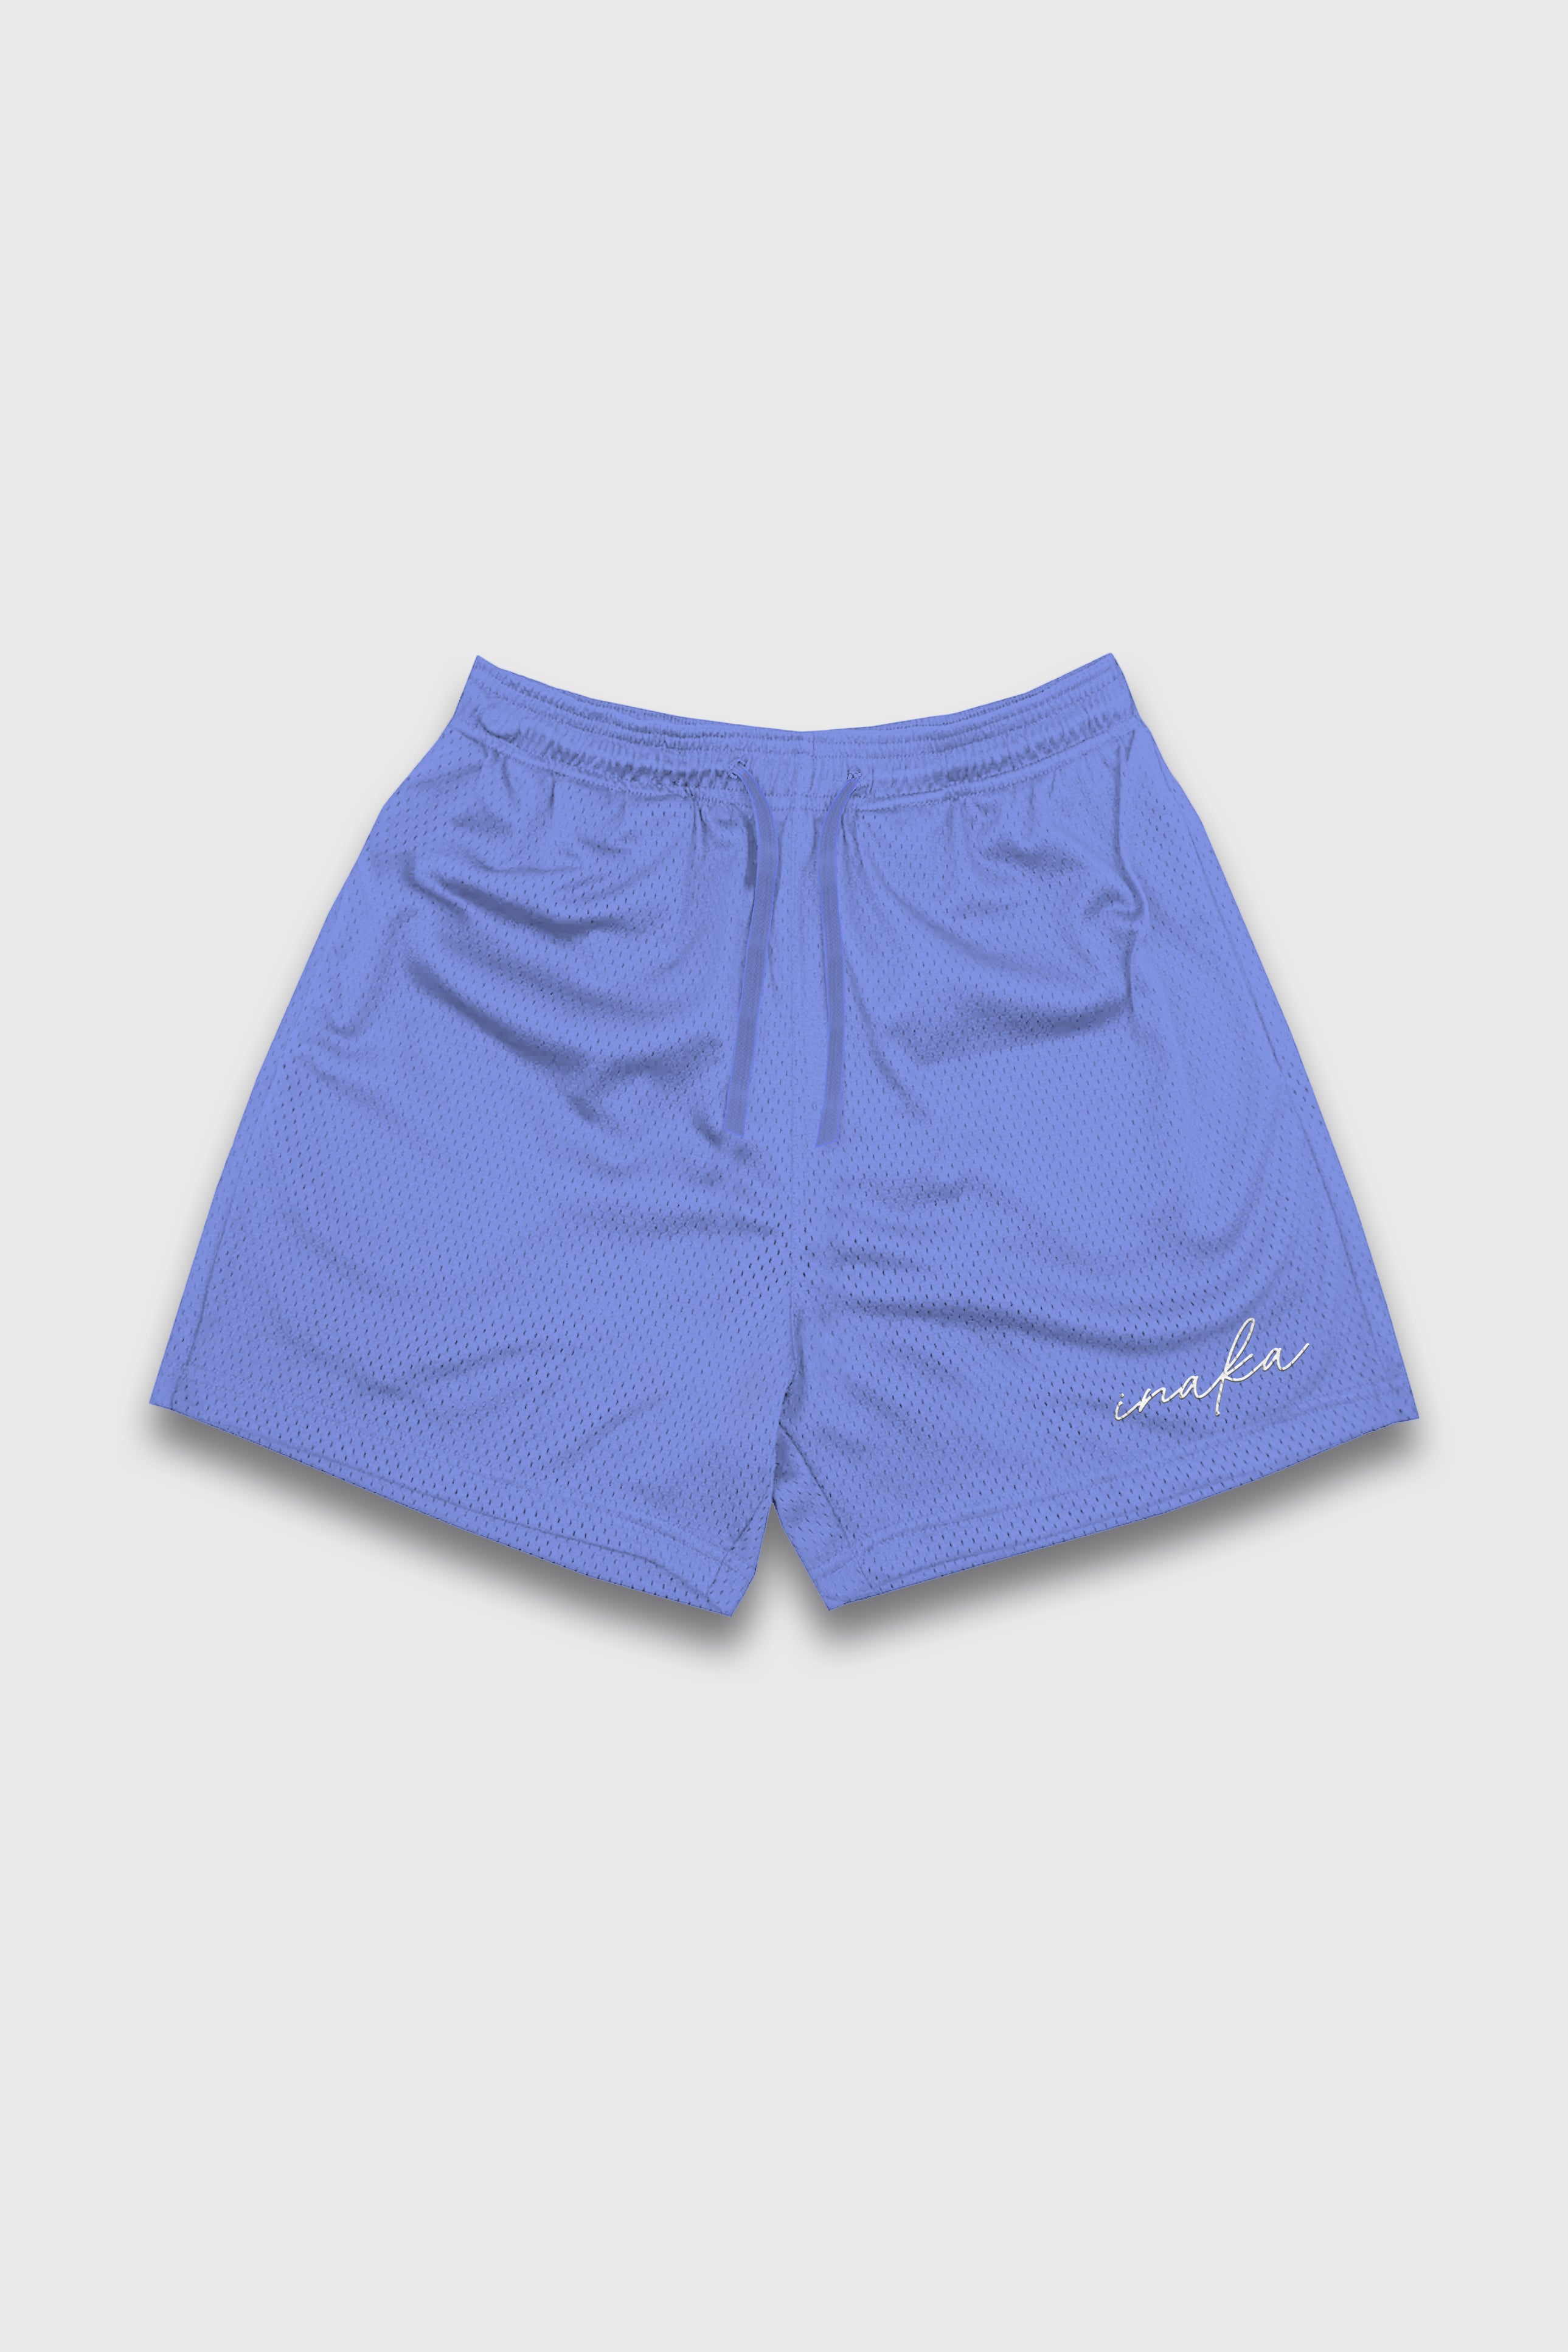 Women's Basic Shorts - Blue Violet